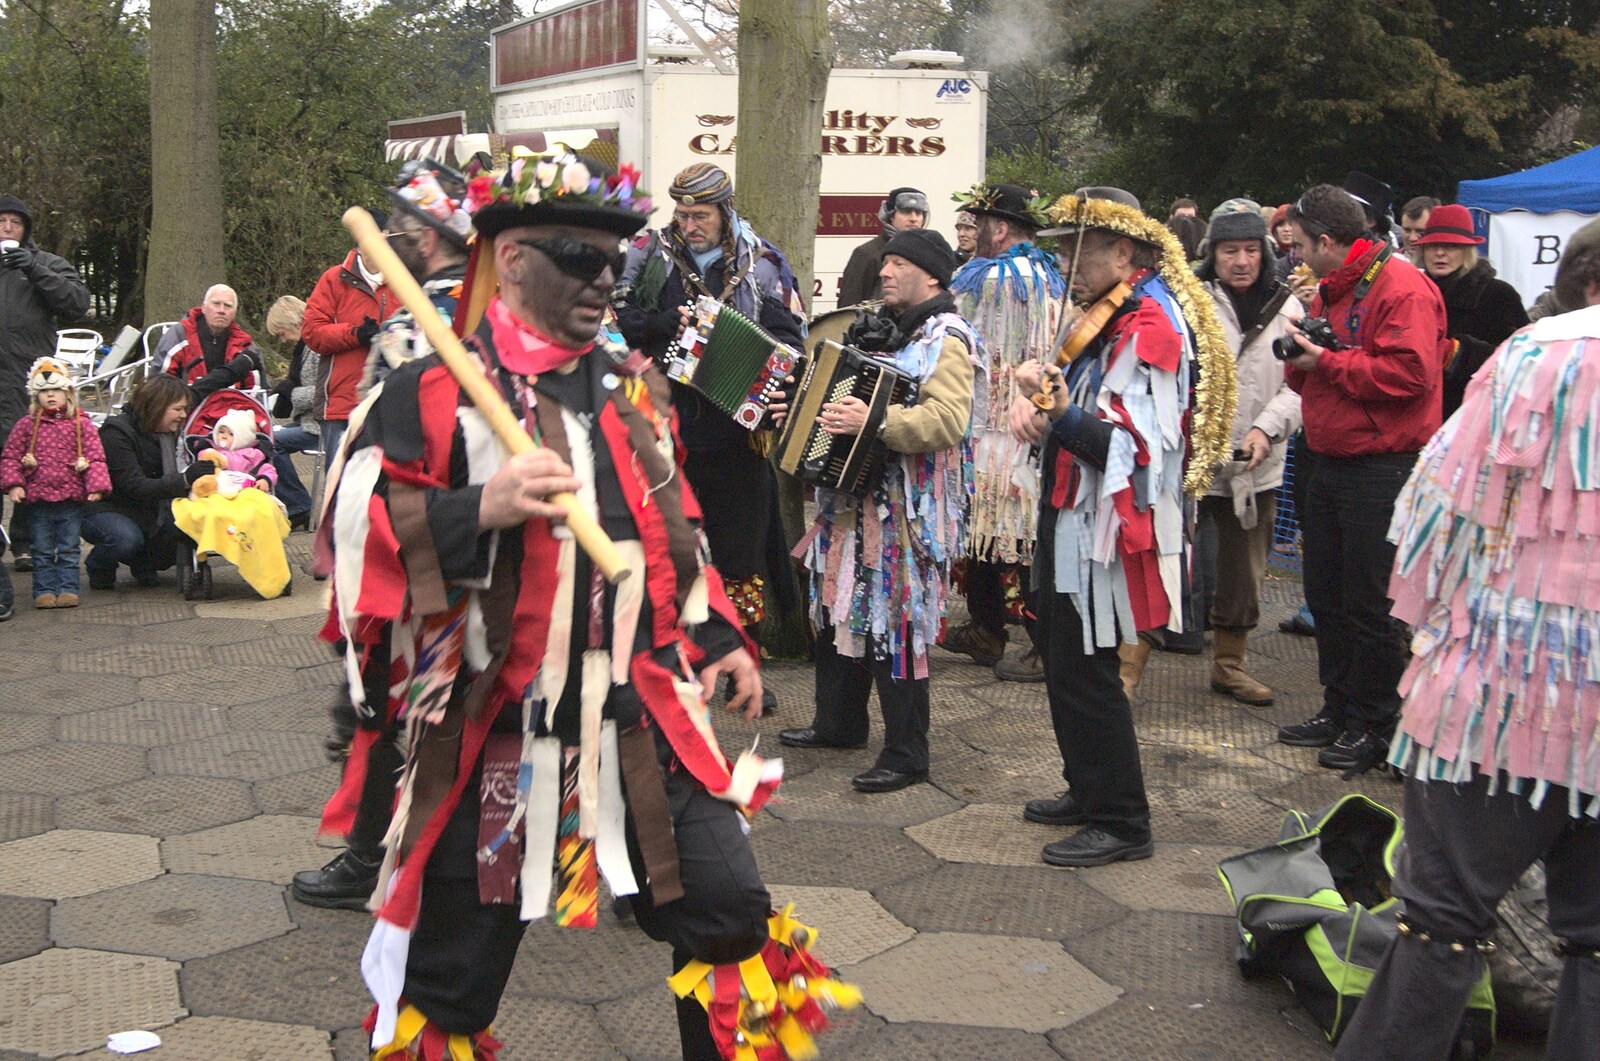 A Christmas Fair, Bury St. Edmunds, Suffolk - 28th November 2010: Dancing with big sticks